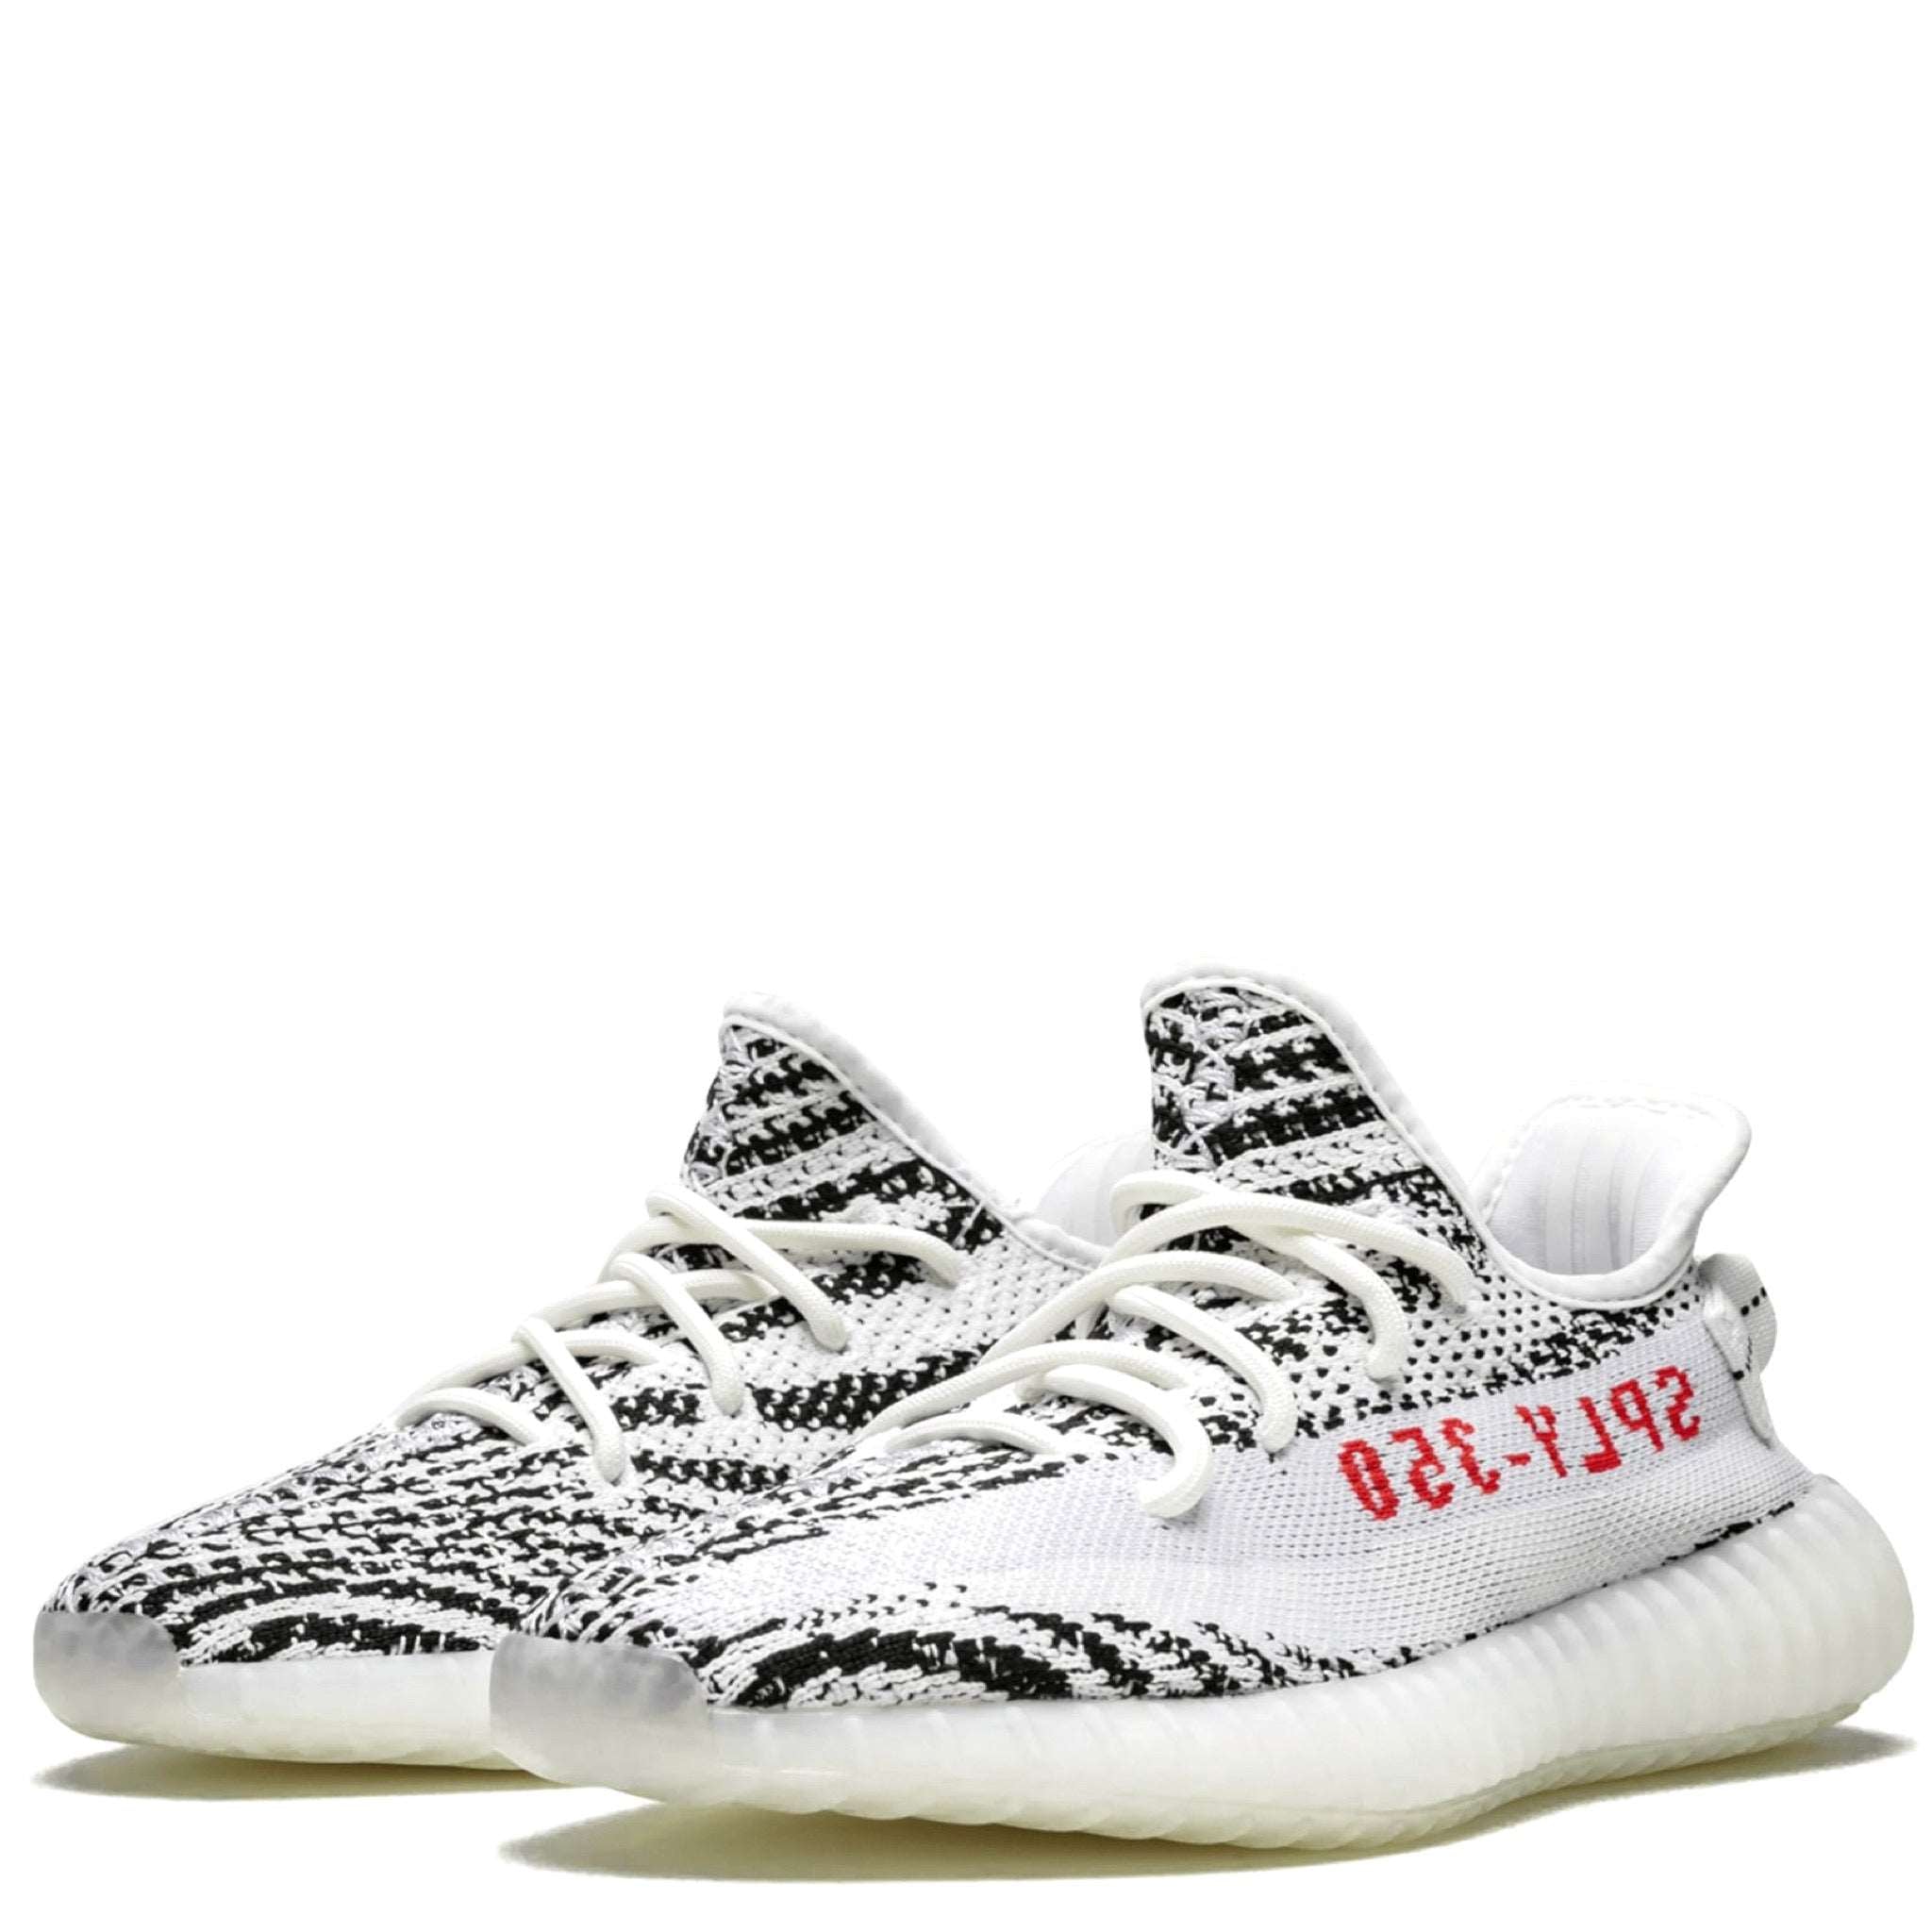 Adidas Yeezy Boost Zebra Sneaker 